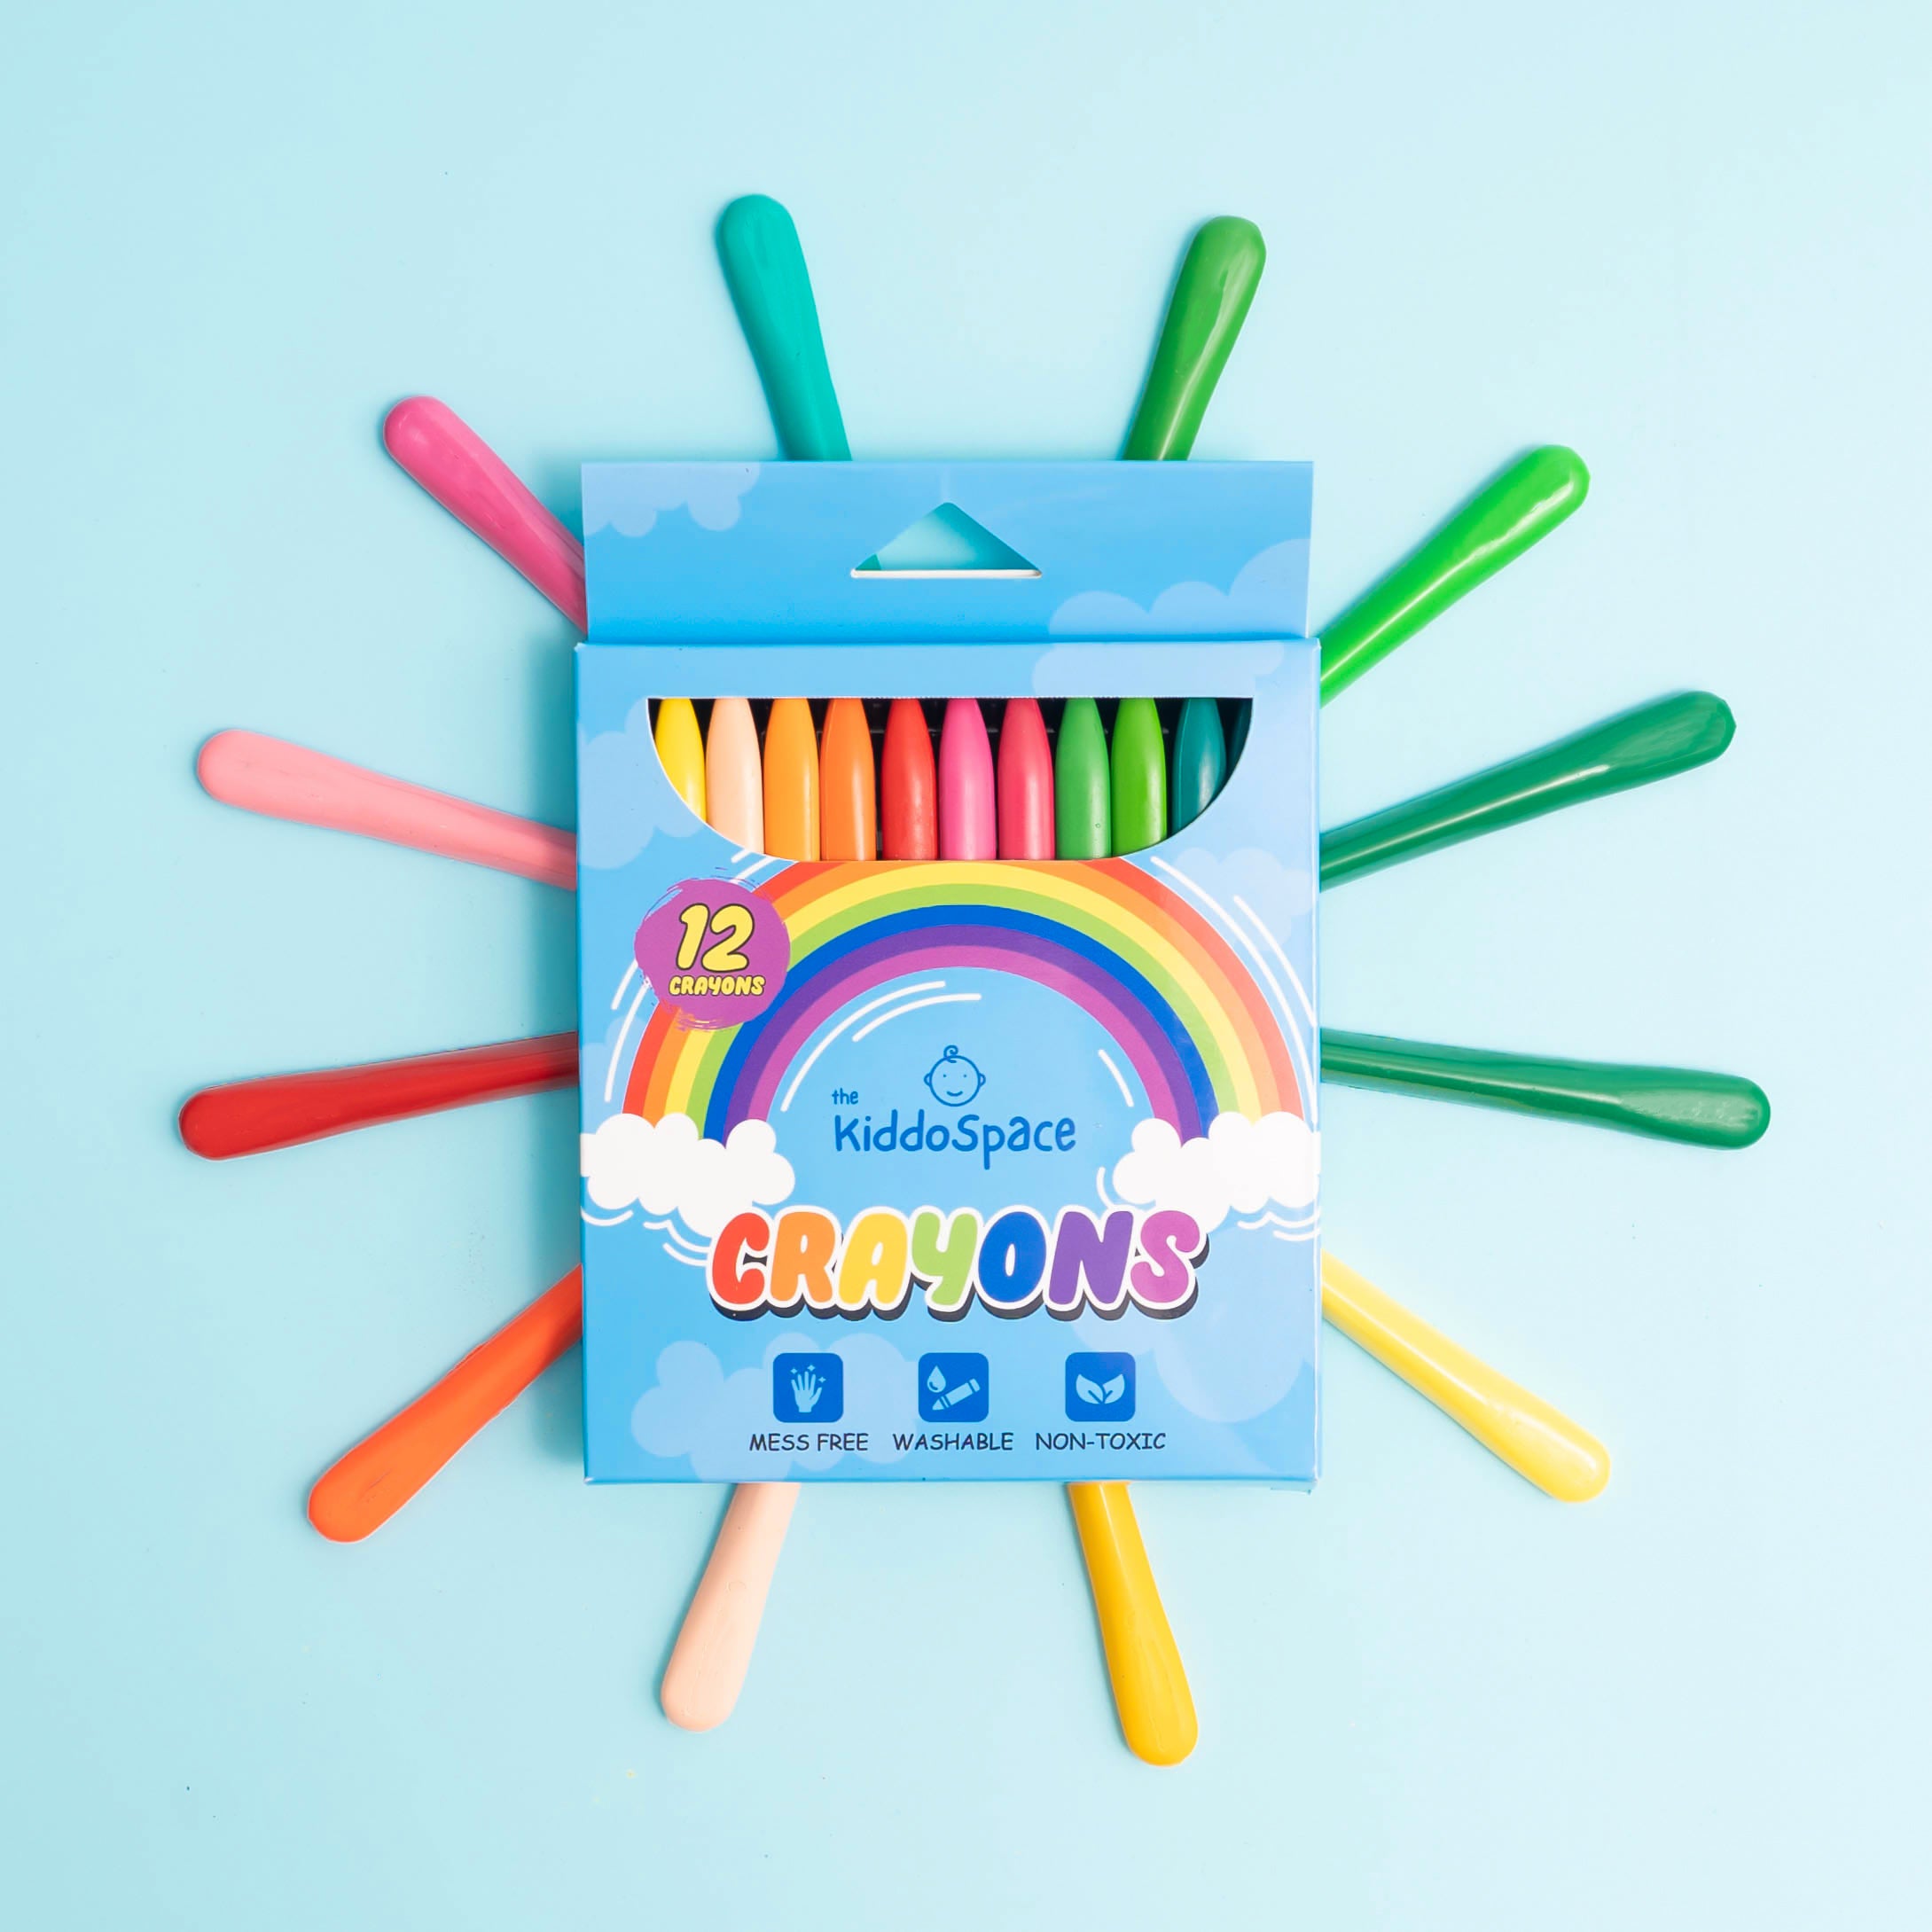 Crayola Washable Crayons 24 Count – S&D Kids